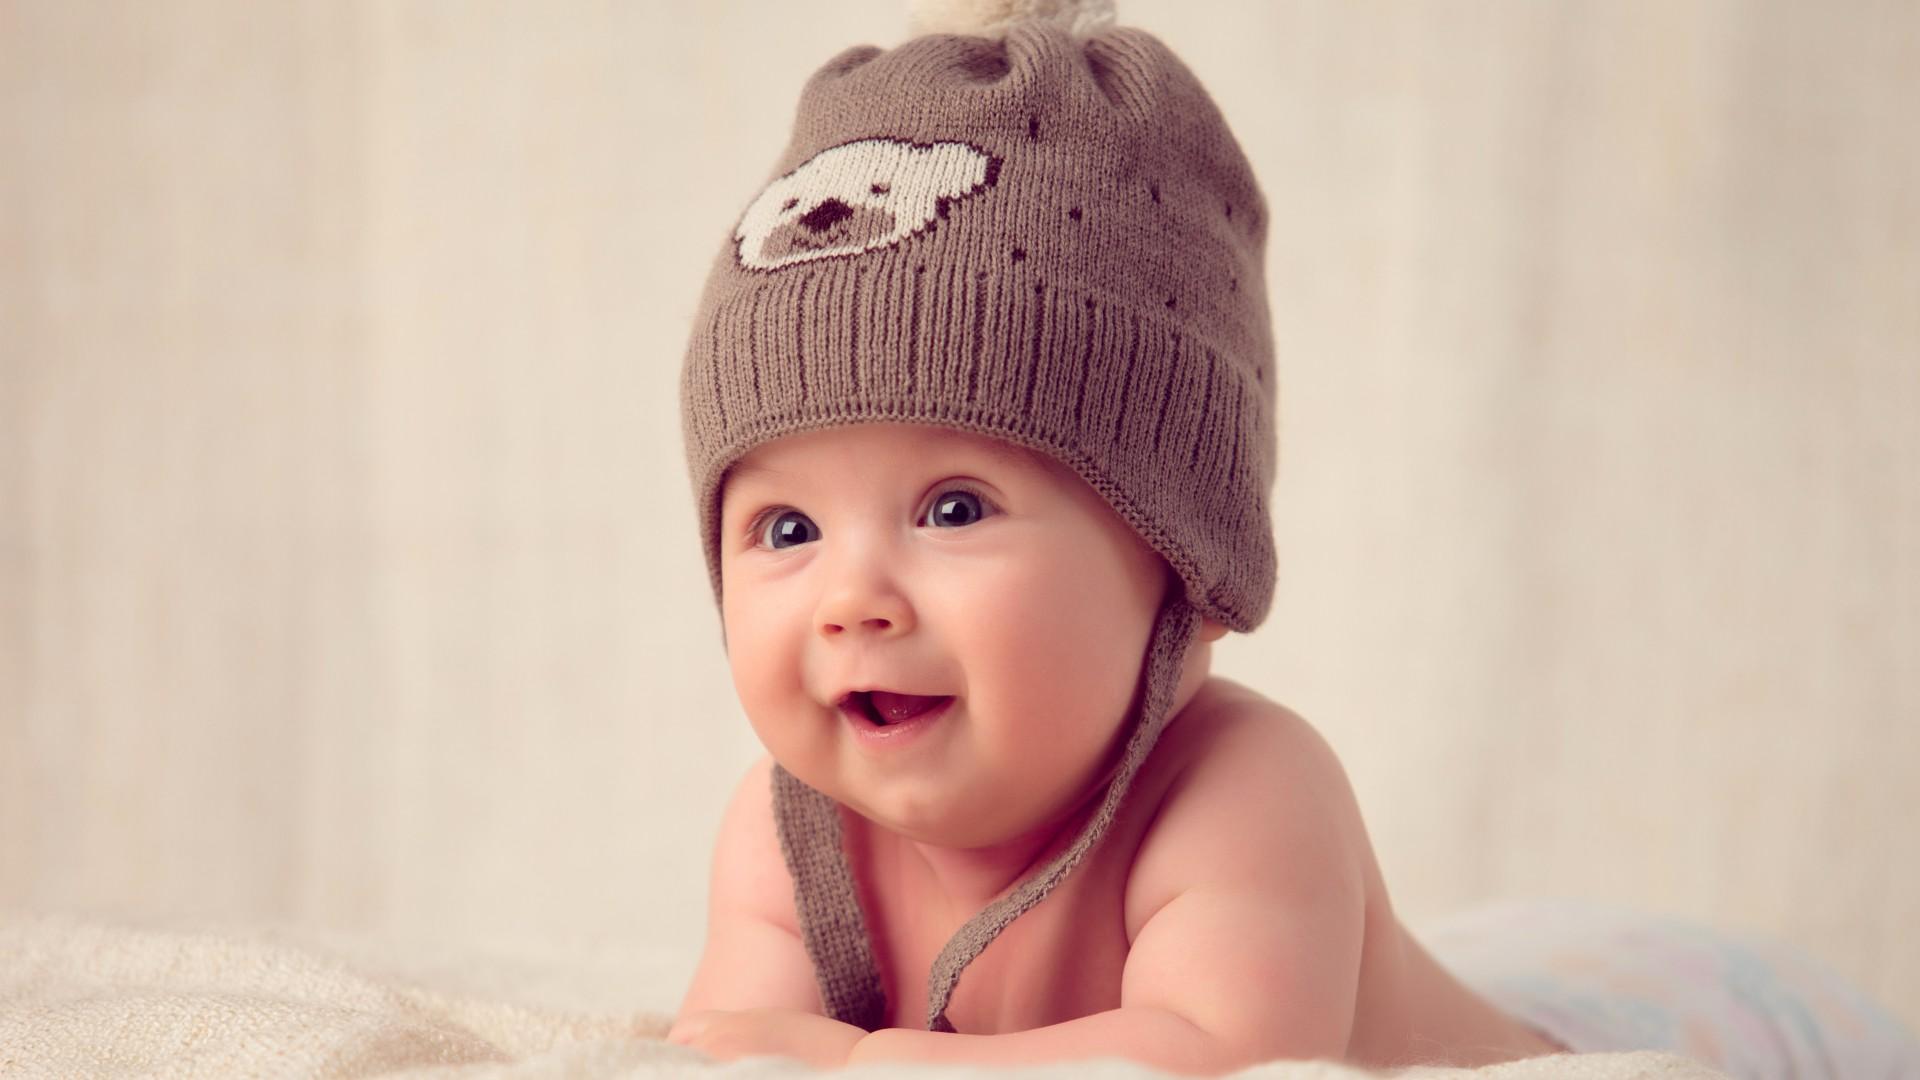 Cute Baby Wallpaper Picture > Flip Wallpaper > Download Free